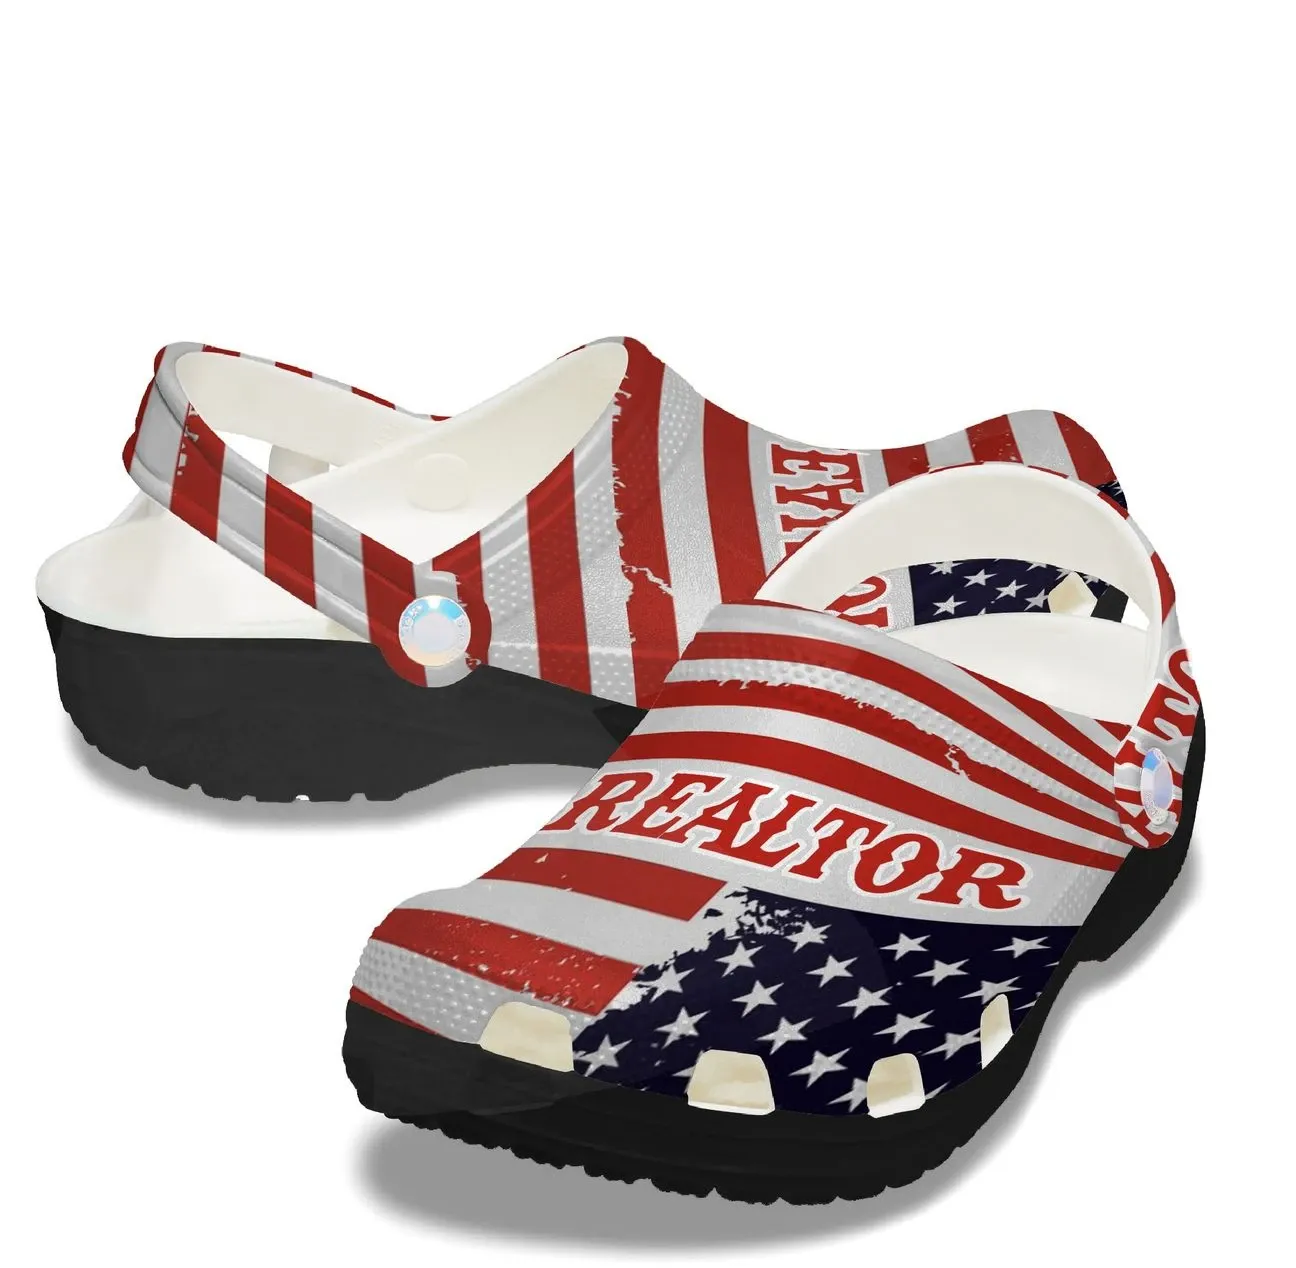 Realtor Personalized Clog Custom Crocs Comfortablefashion Style Comfortable For Women Men Kid Print 3D Flag American